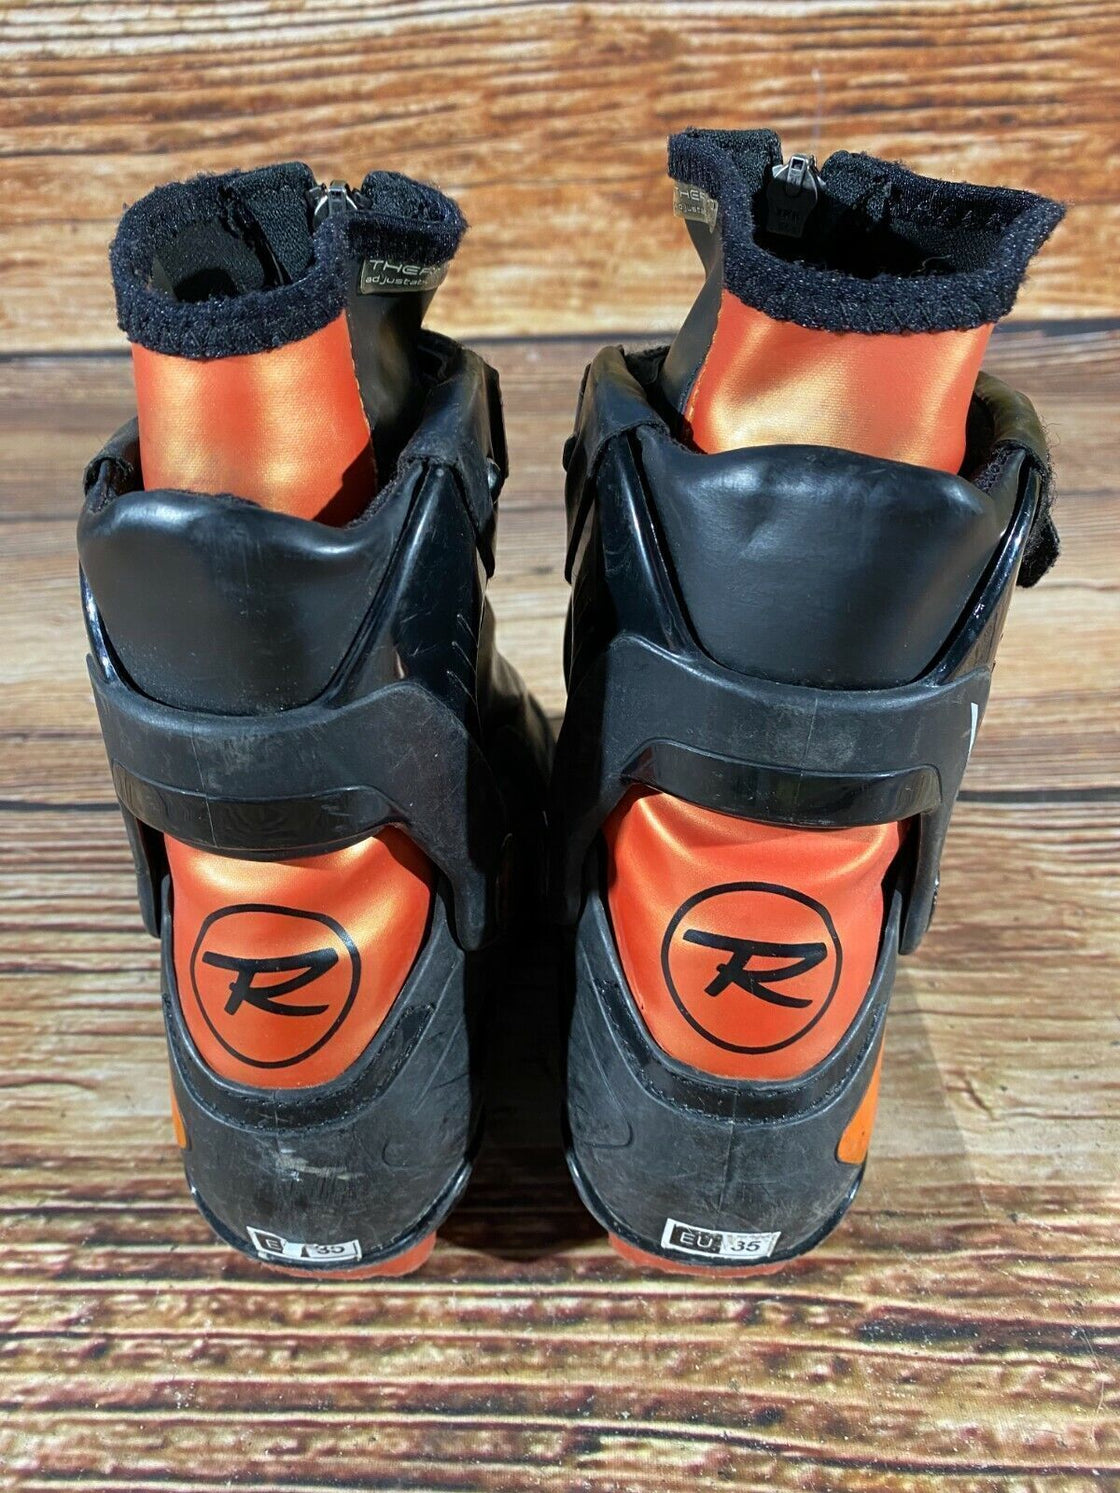 Rossignol X-ium Junior Nordic Cross Country Ski Boots Size EU35 US3.5 NNN